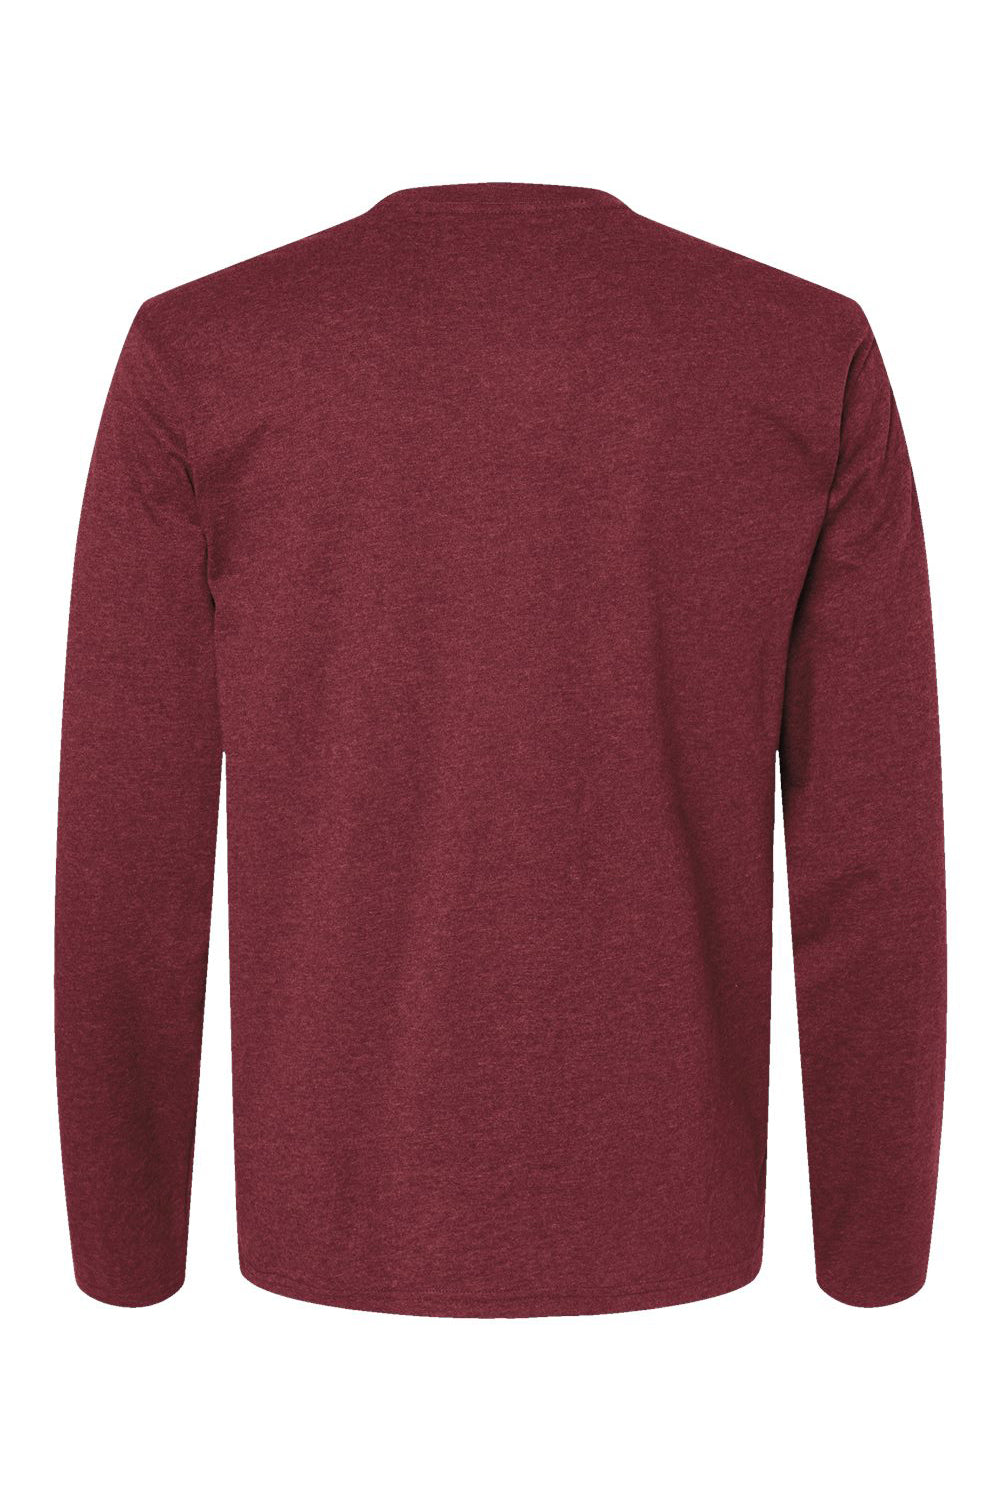 Kastlfel 2016 Mens RecycledSoft Long Sleeve Crewneck T-Shirt Burgundy Flat Back